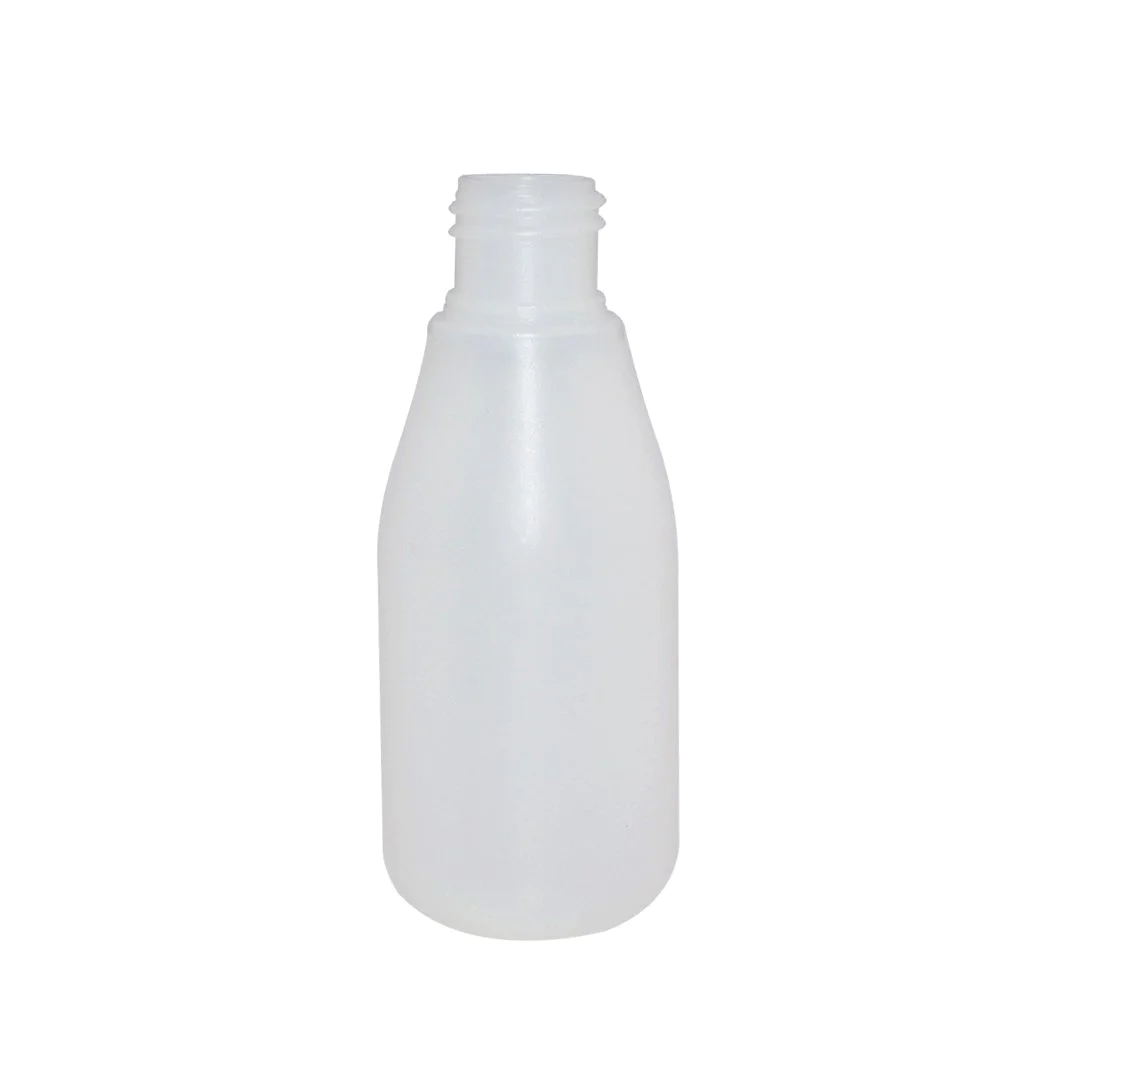 Semi transparent PE plastic bottle with trigger for garden